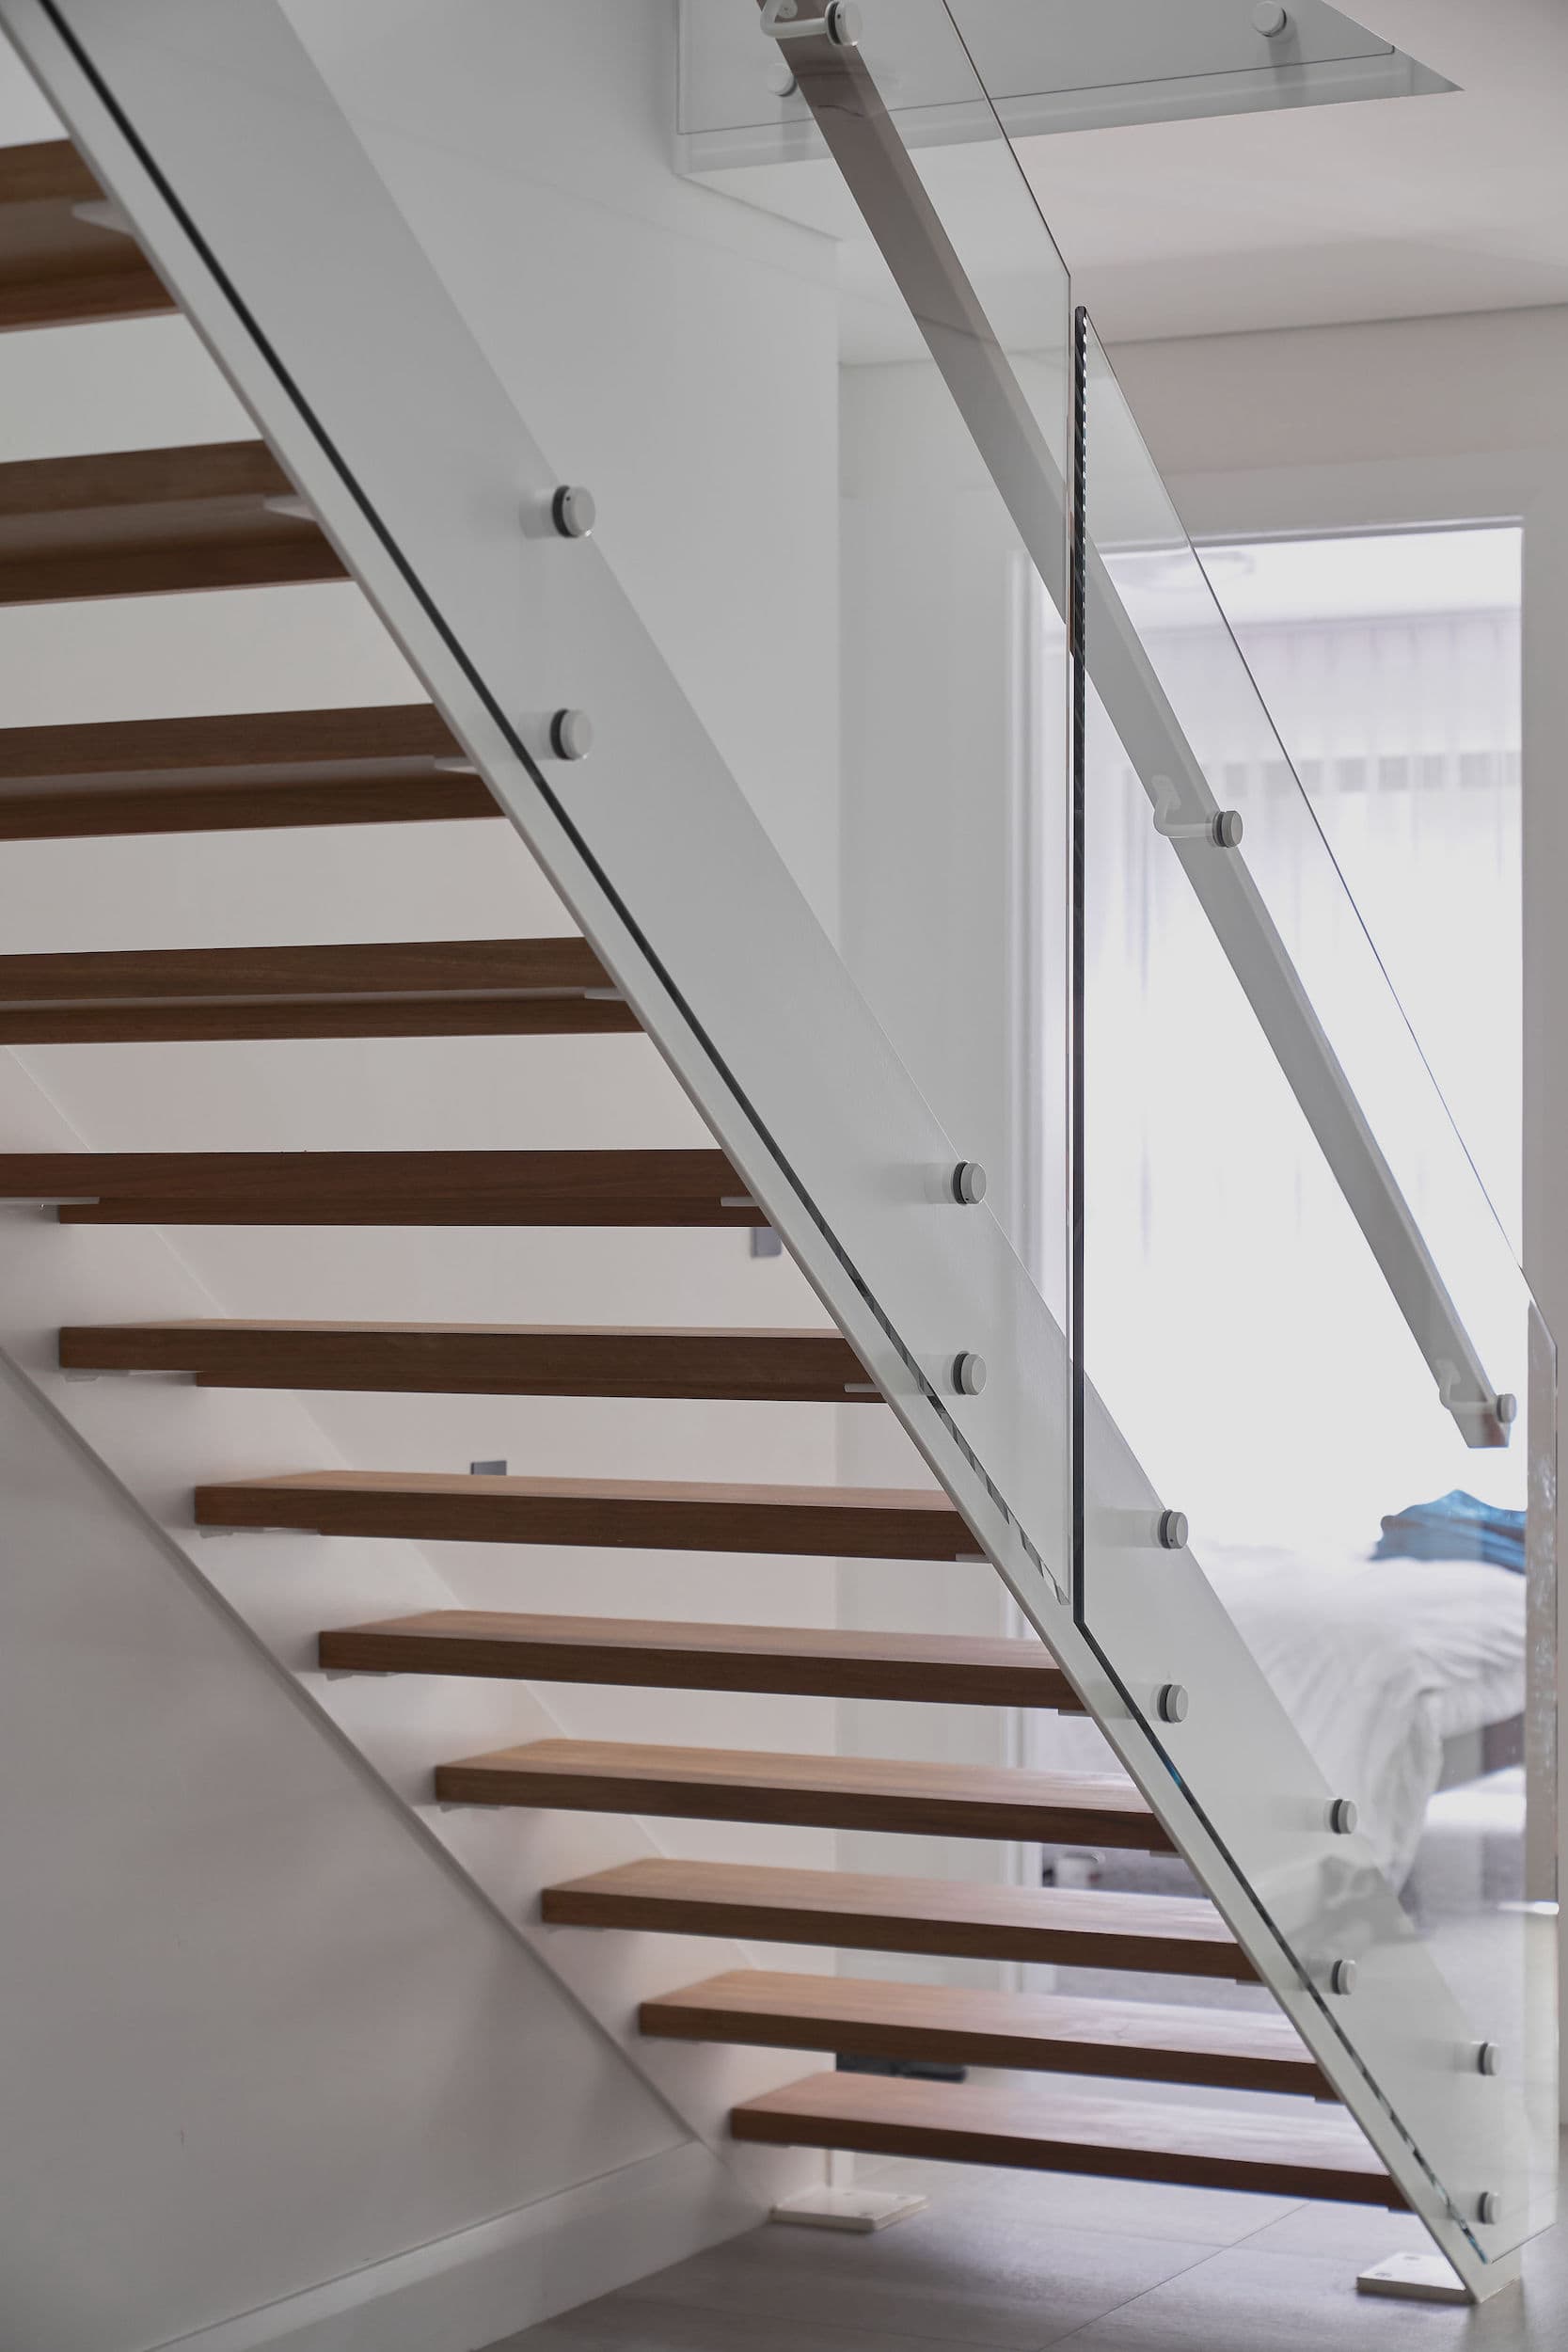 Staircase design, fabrication & installation